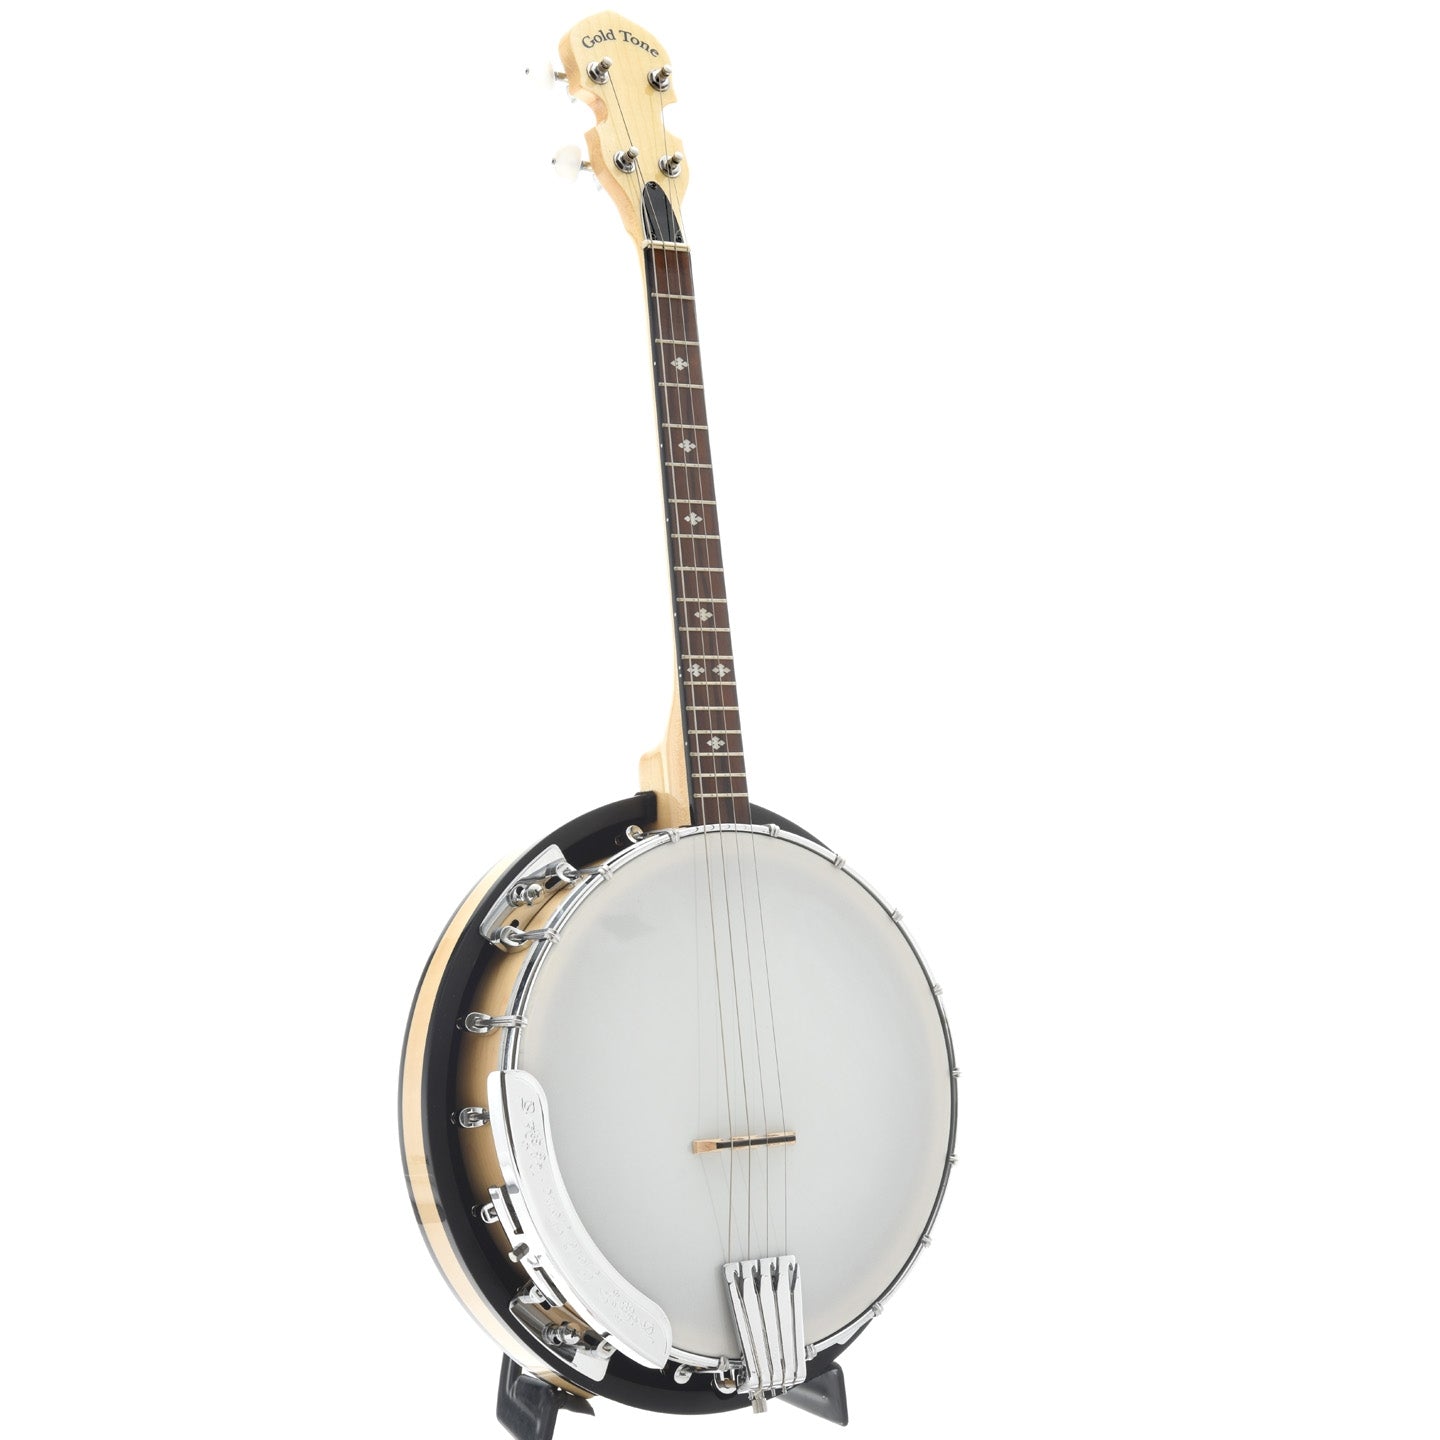 Image 2 of Gold Tone CC-It Irish Tenor Banjo - SKU# GTCCIT : Product Type Tenor & Plectrum Banjos : Elderly Instruments